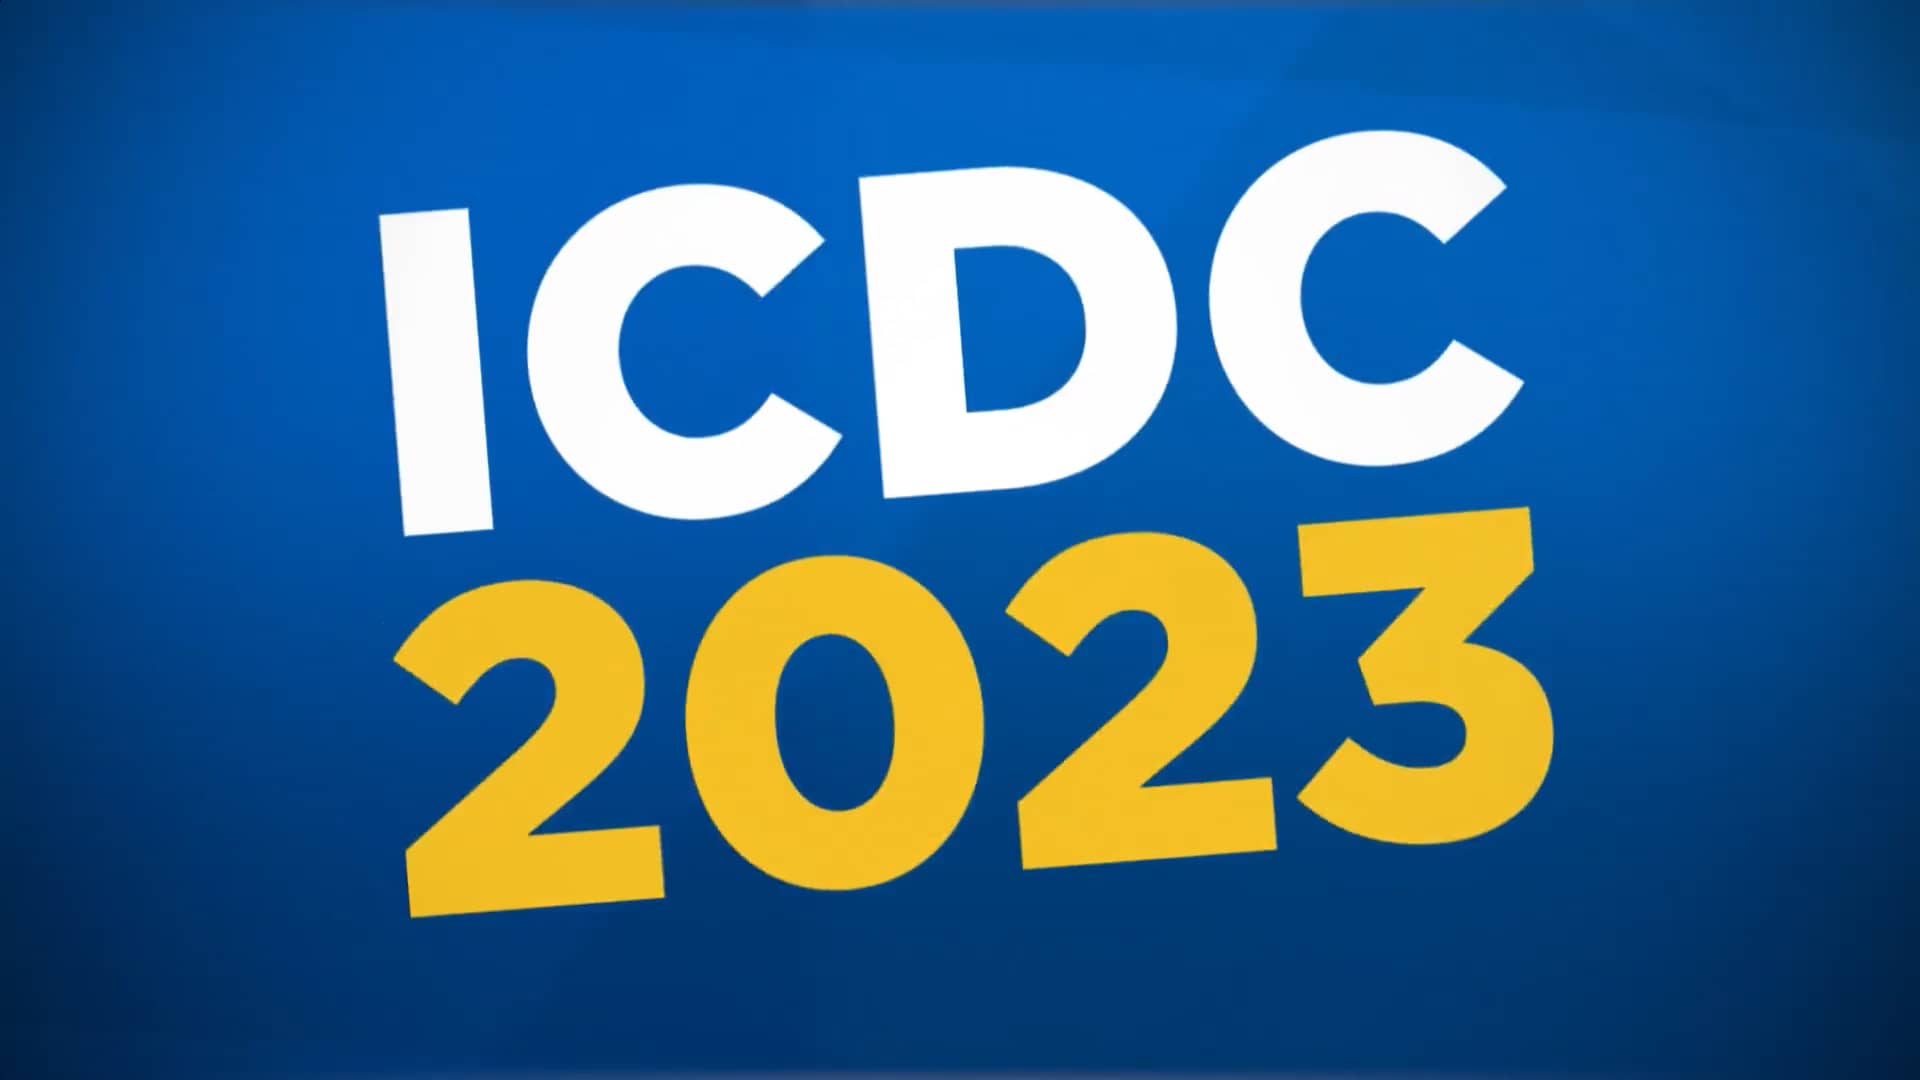 DECA ICDC Promo Video 2023 on Vimeo